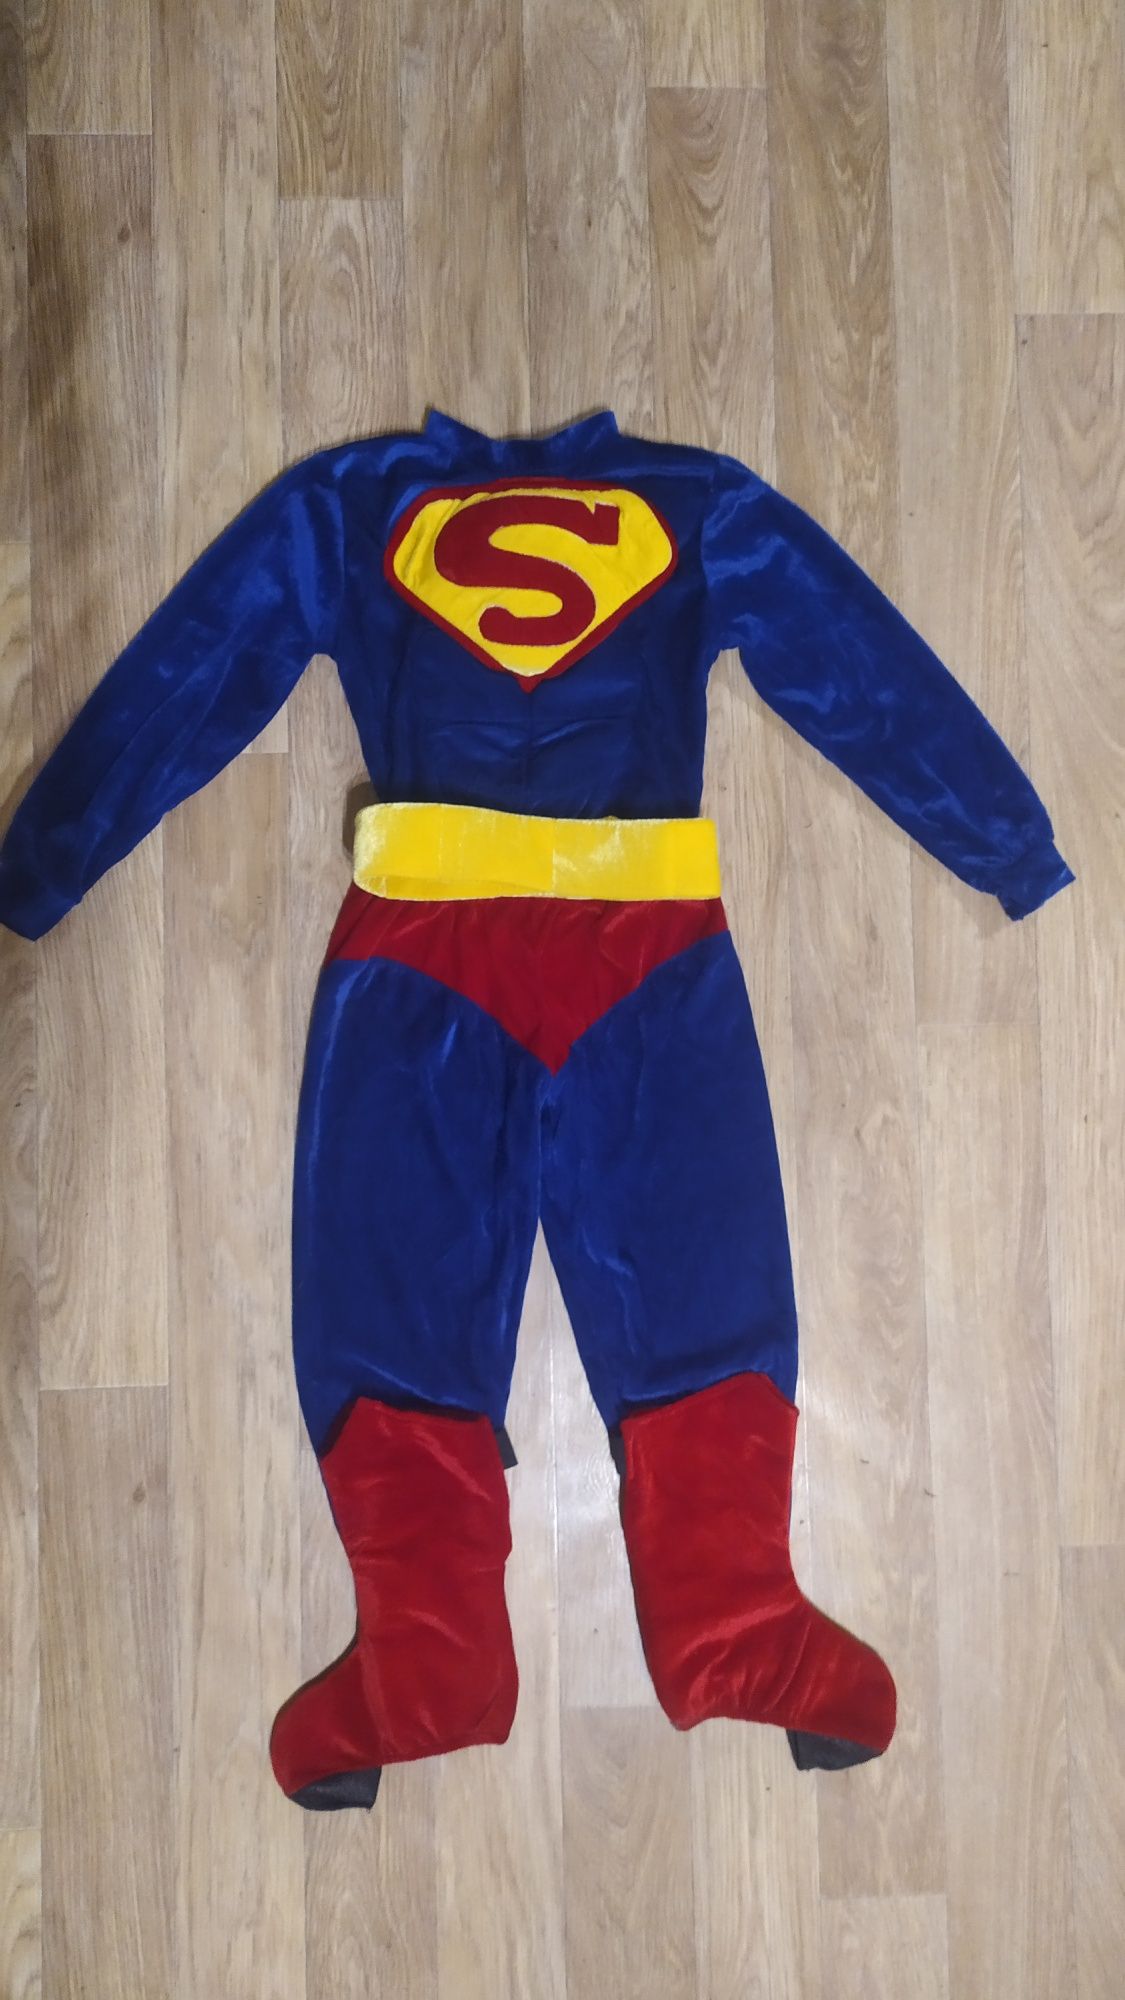 Детский костюм Супермена